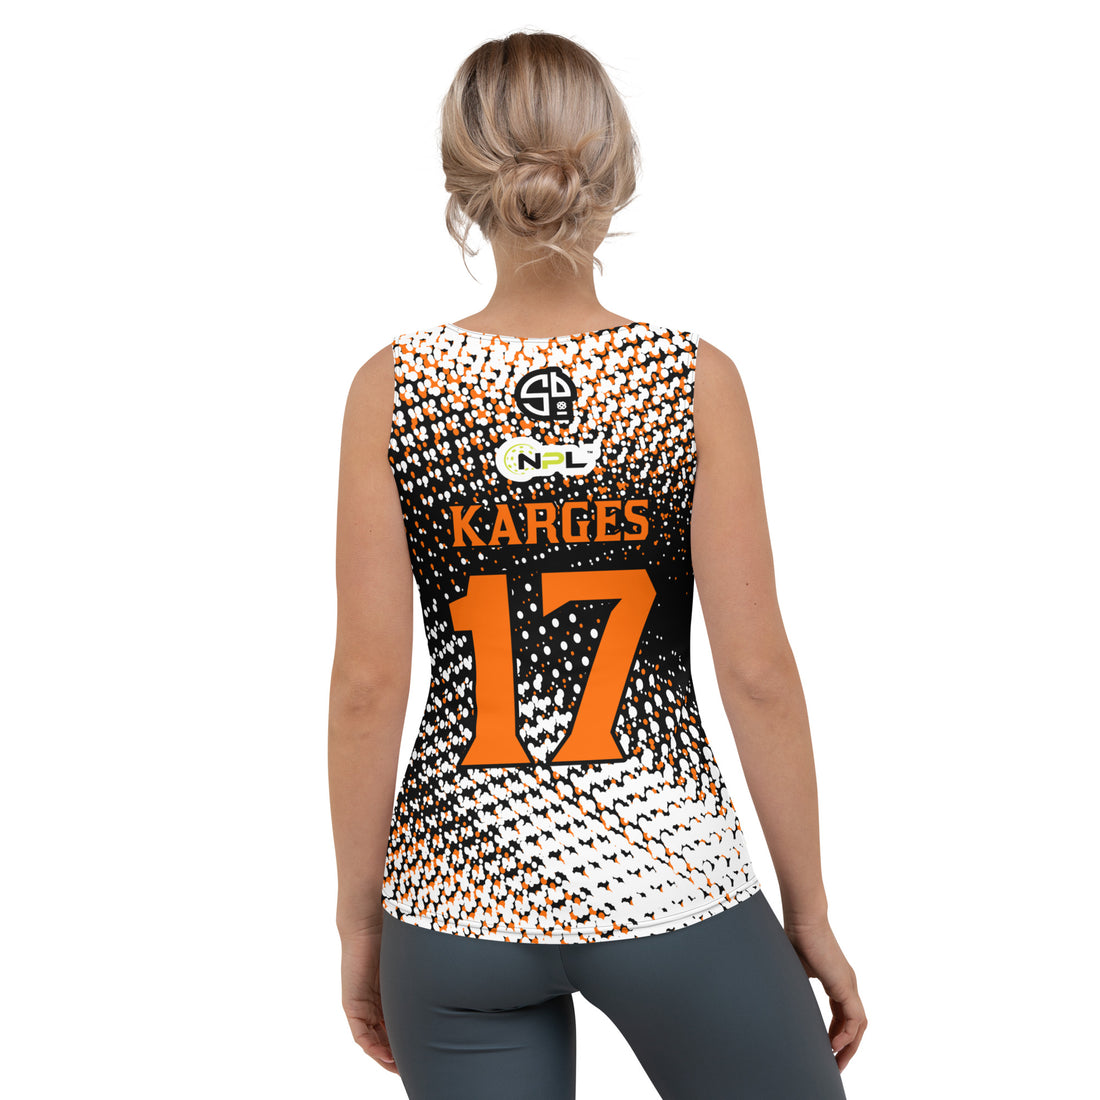 Chris Karges 17 Austin Ignite™ SKYblue™ 2023 Authentic Sleeveless Jersey in Black, Orange & White